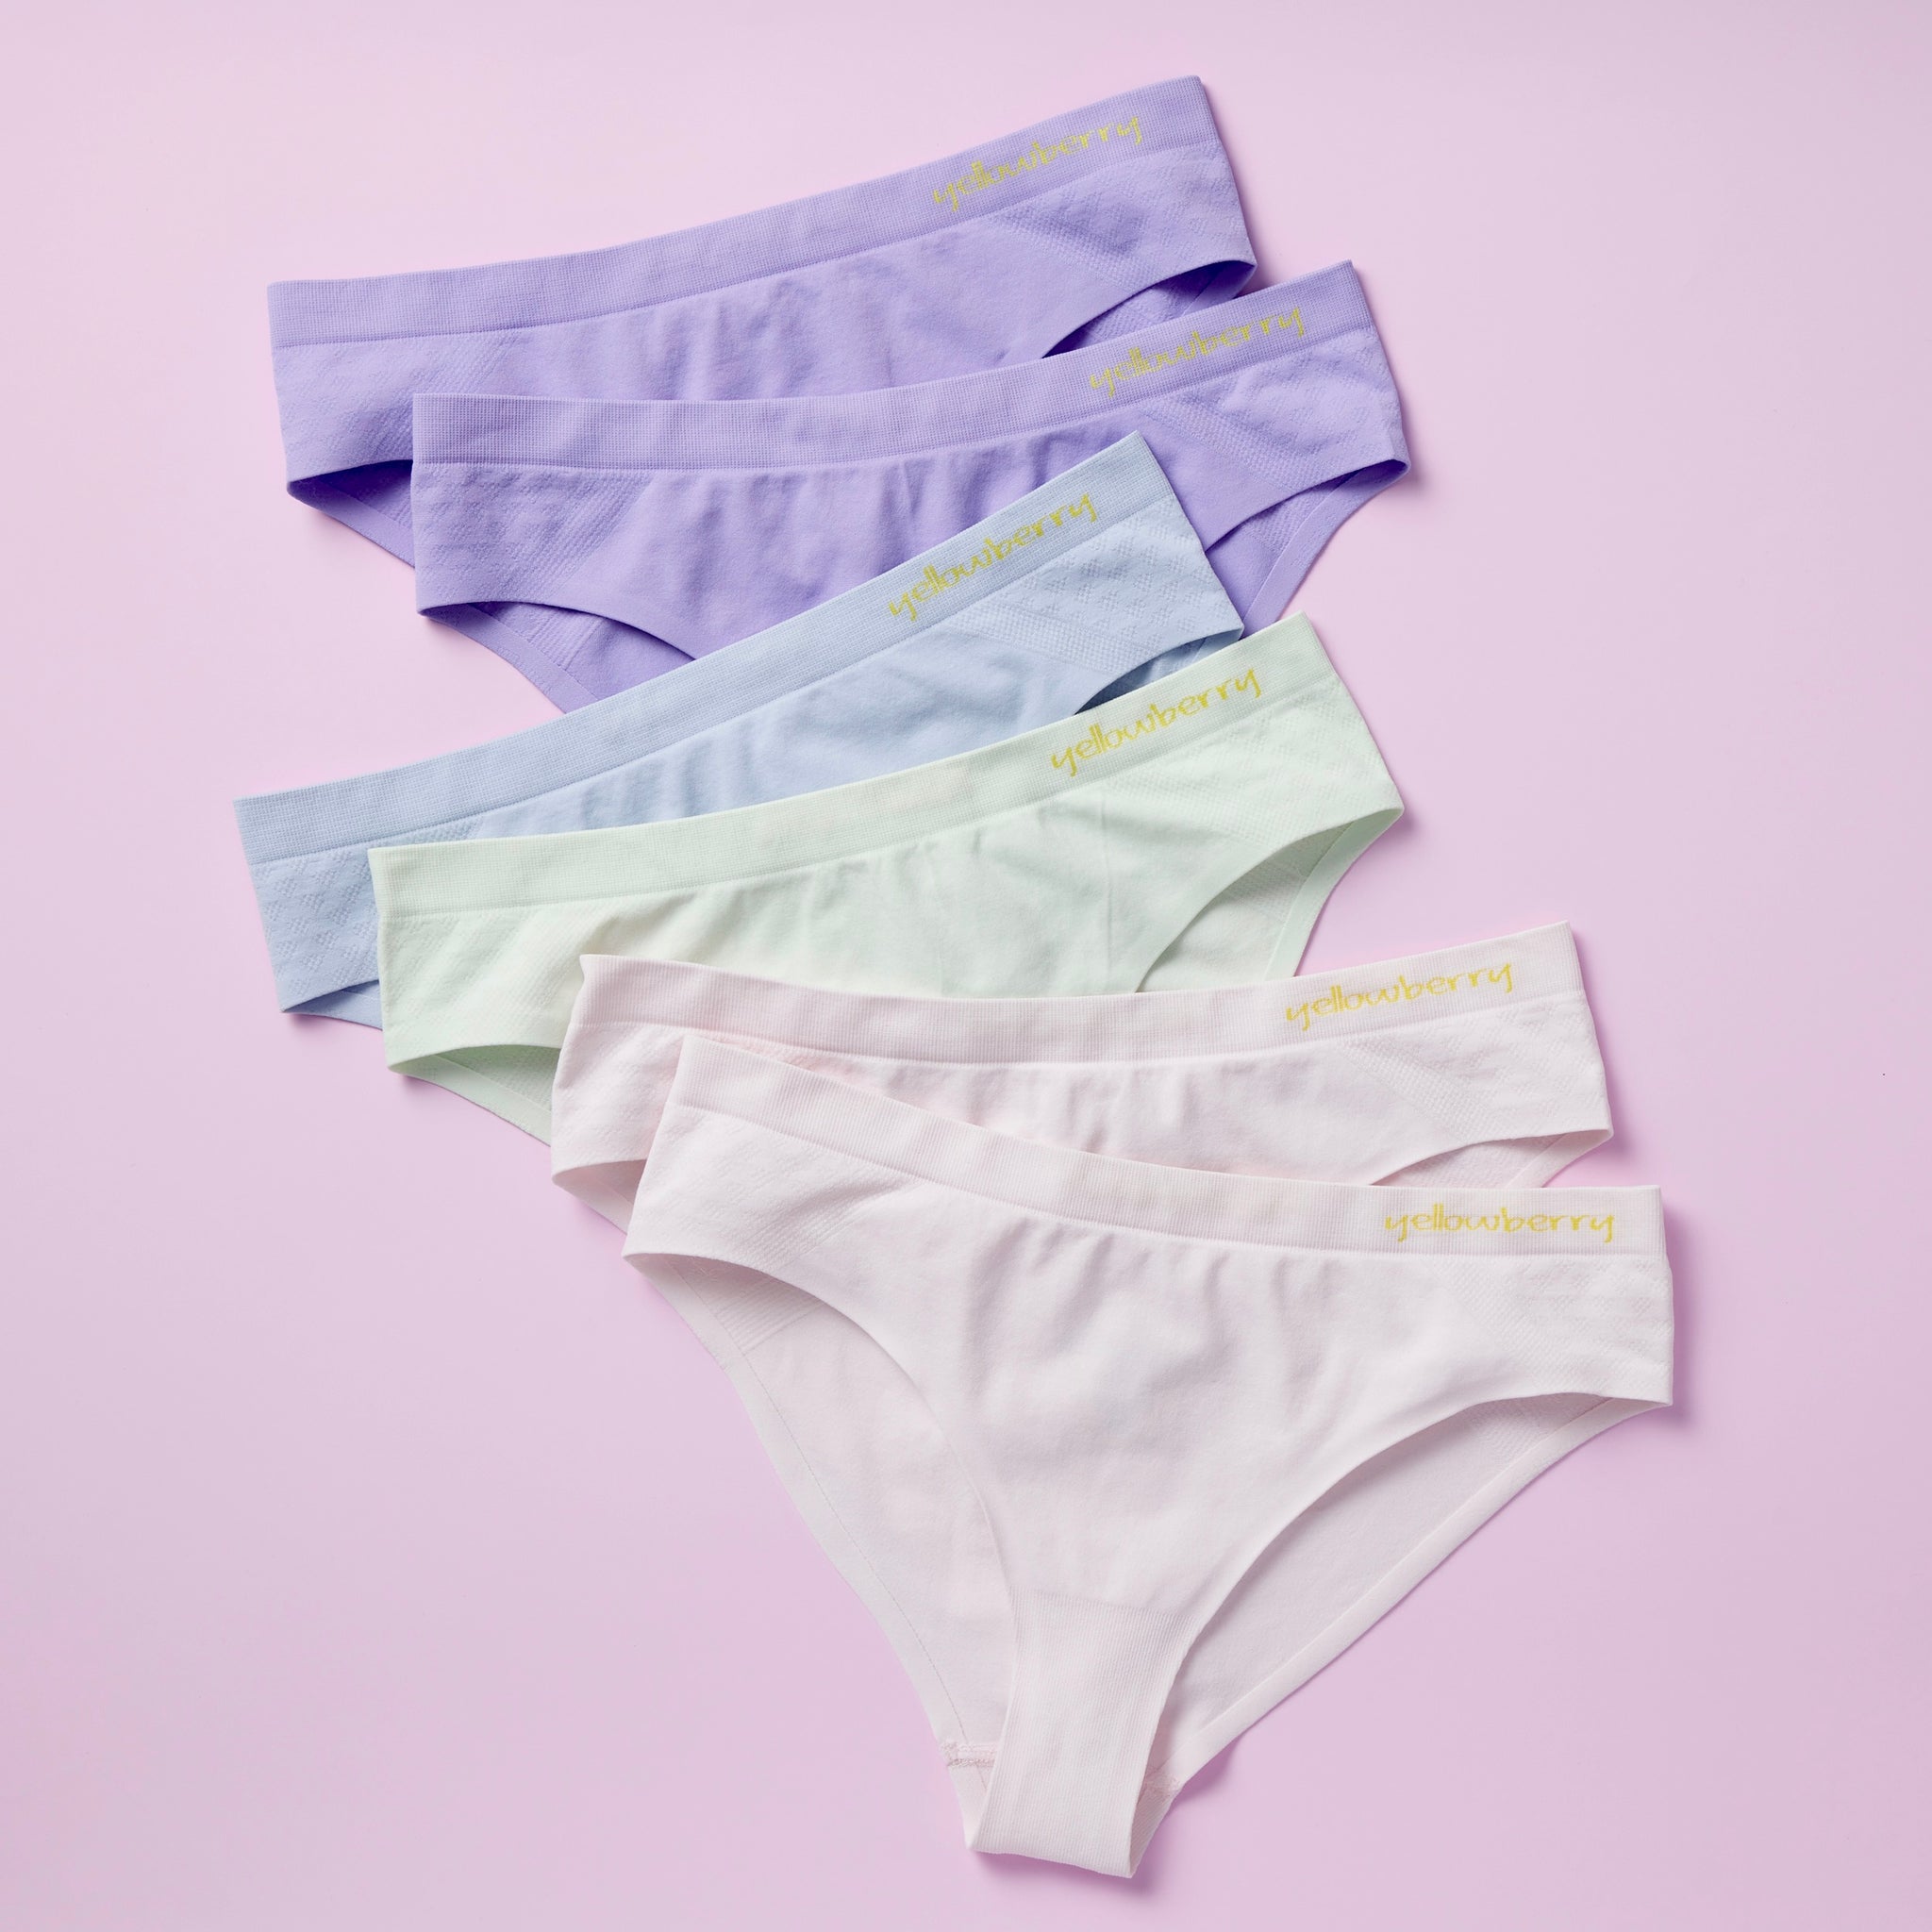 Bulk-buy Fashionable Multiple Color Low Waist V Panty Used Panties  Underwear Seamless Woman Panties price comparison